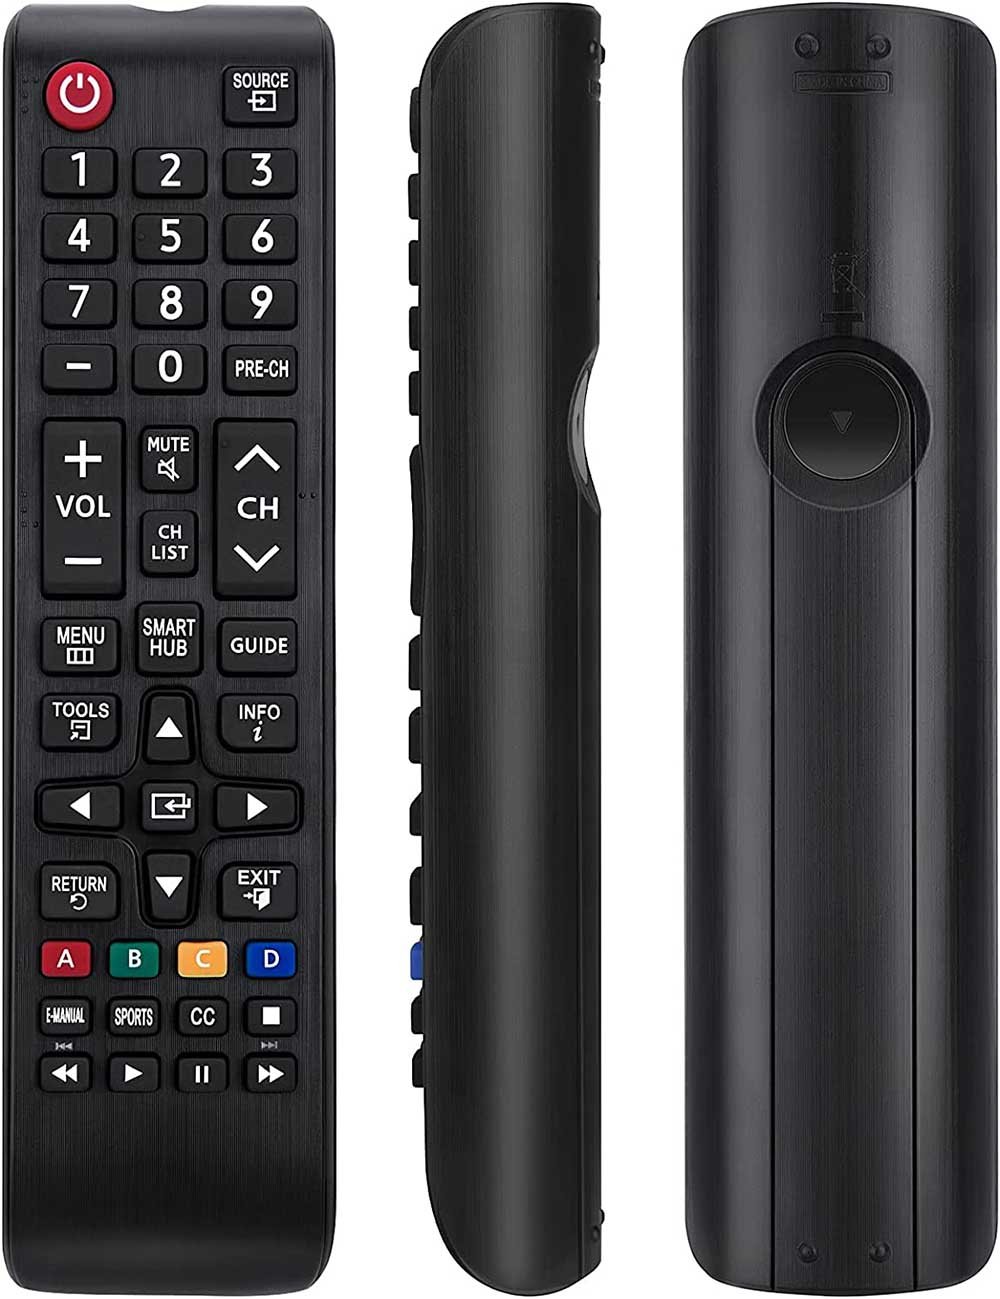 Samsung Smart TV remote.jpg